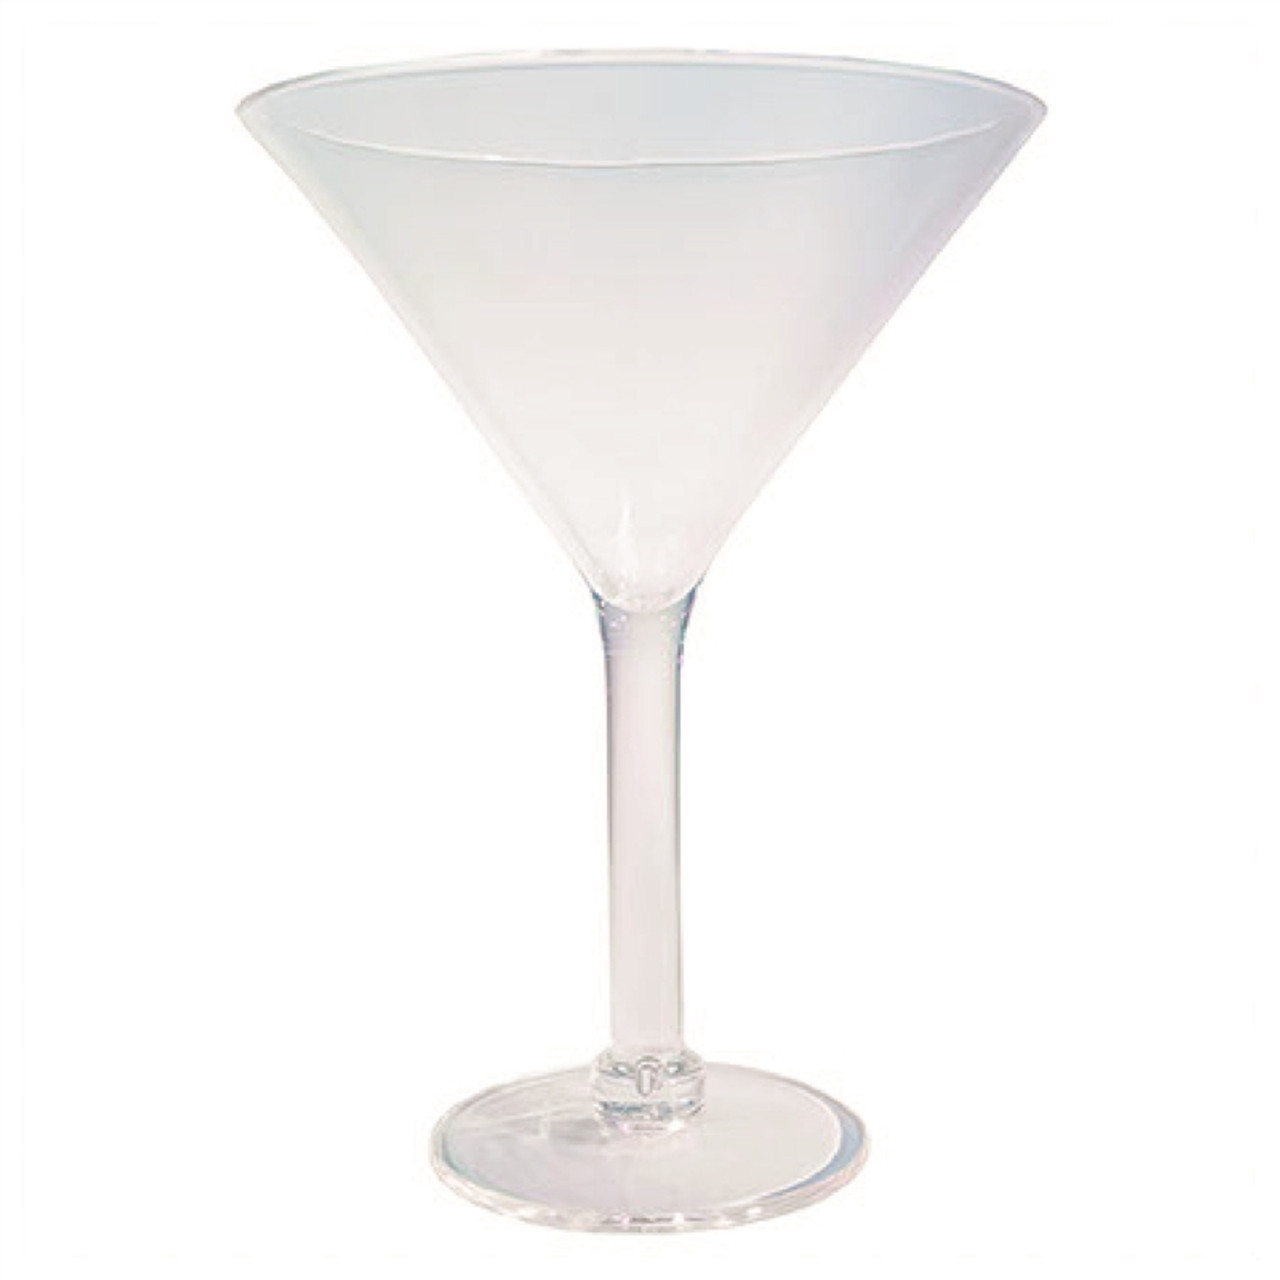 10 Oz. Martini Glass - Display Pros